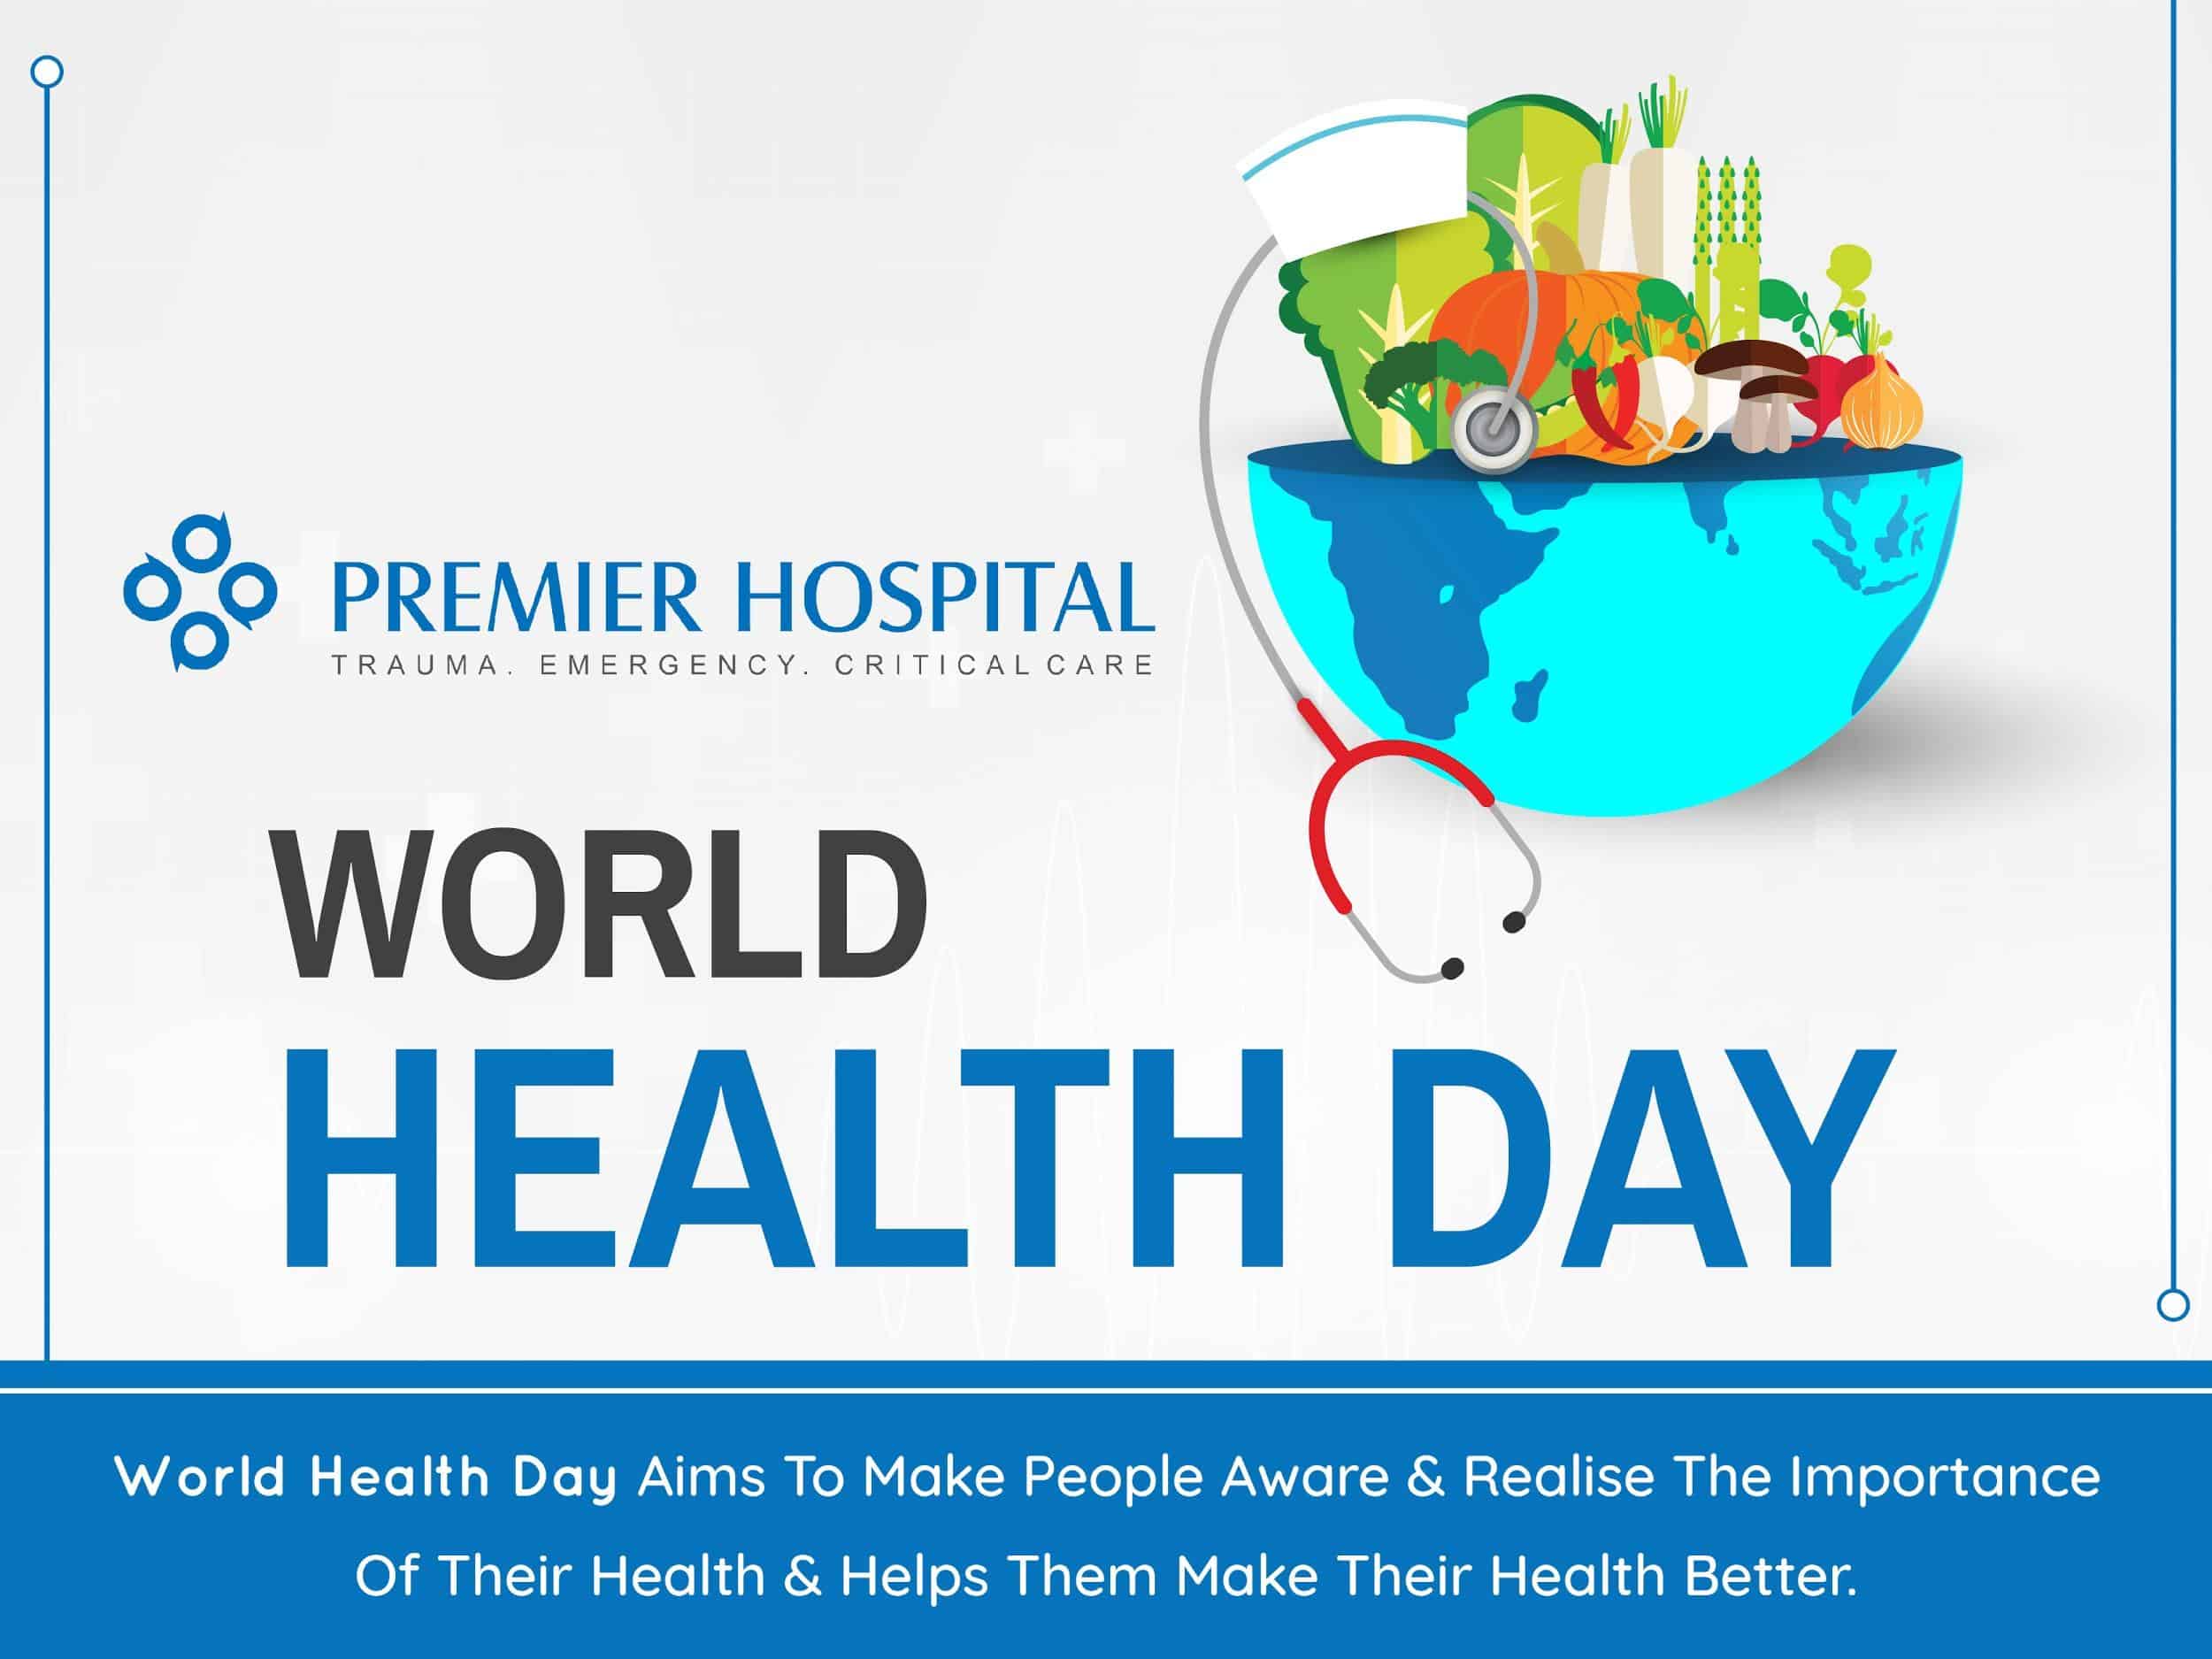 World Health Day - Why We Celebrate it